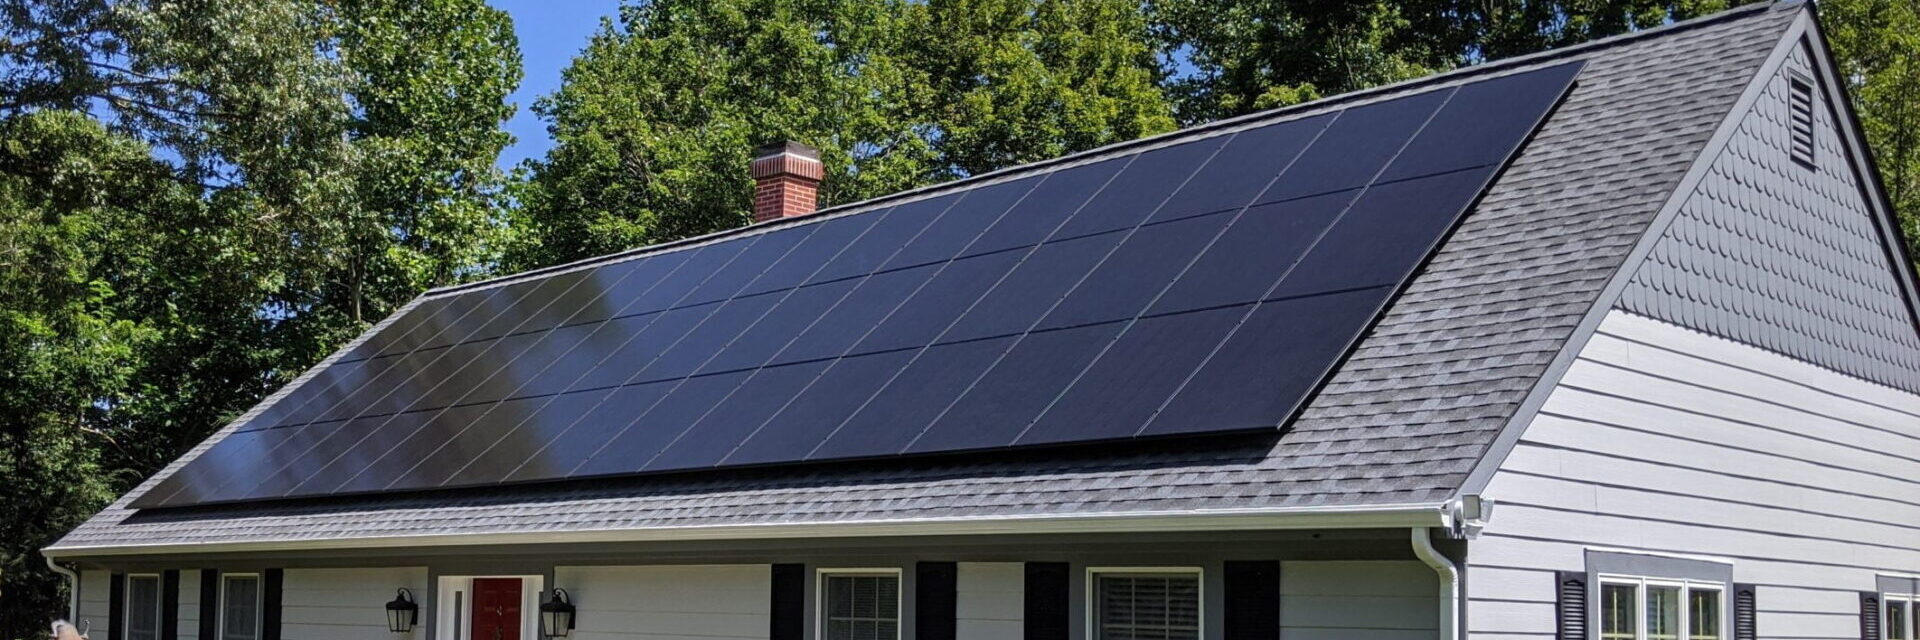 Professionally installed solar panels on roof in Warrenton Virginia